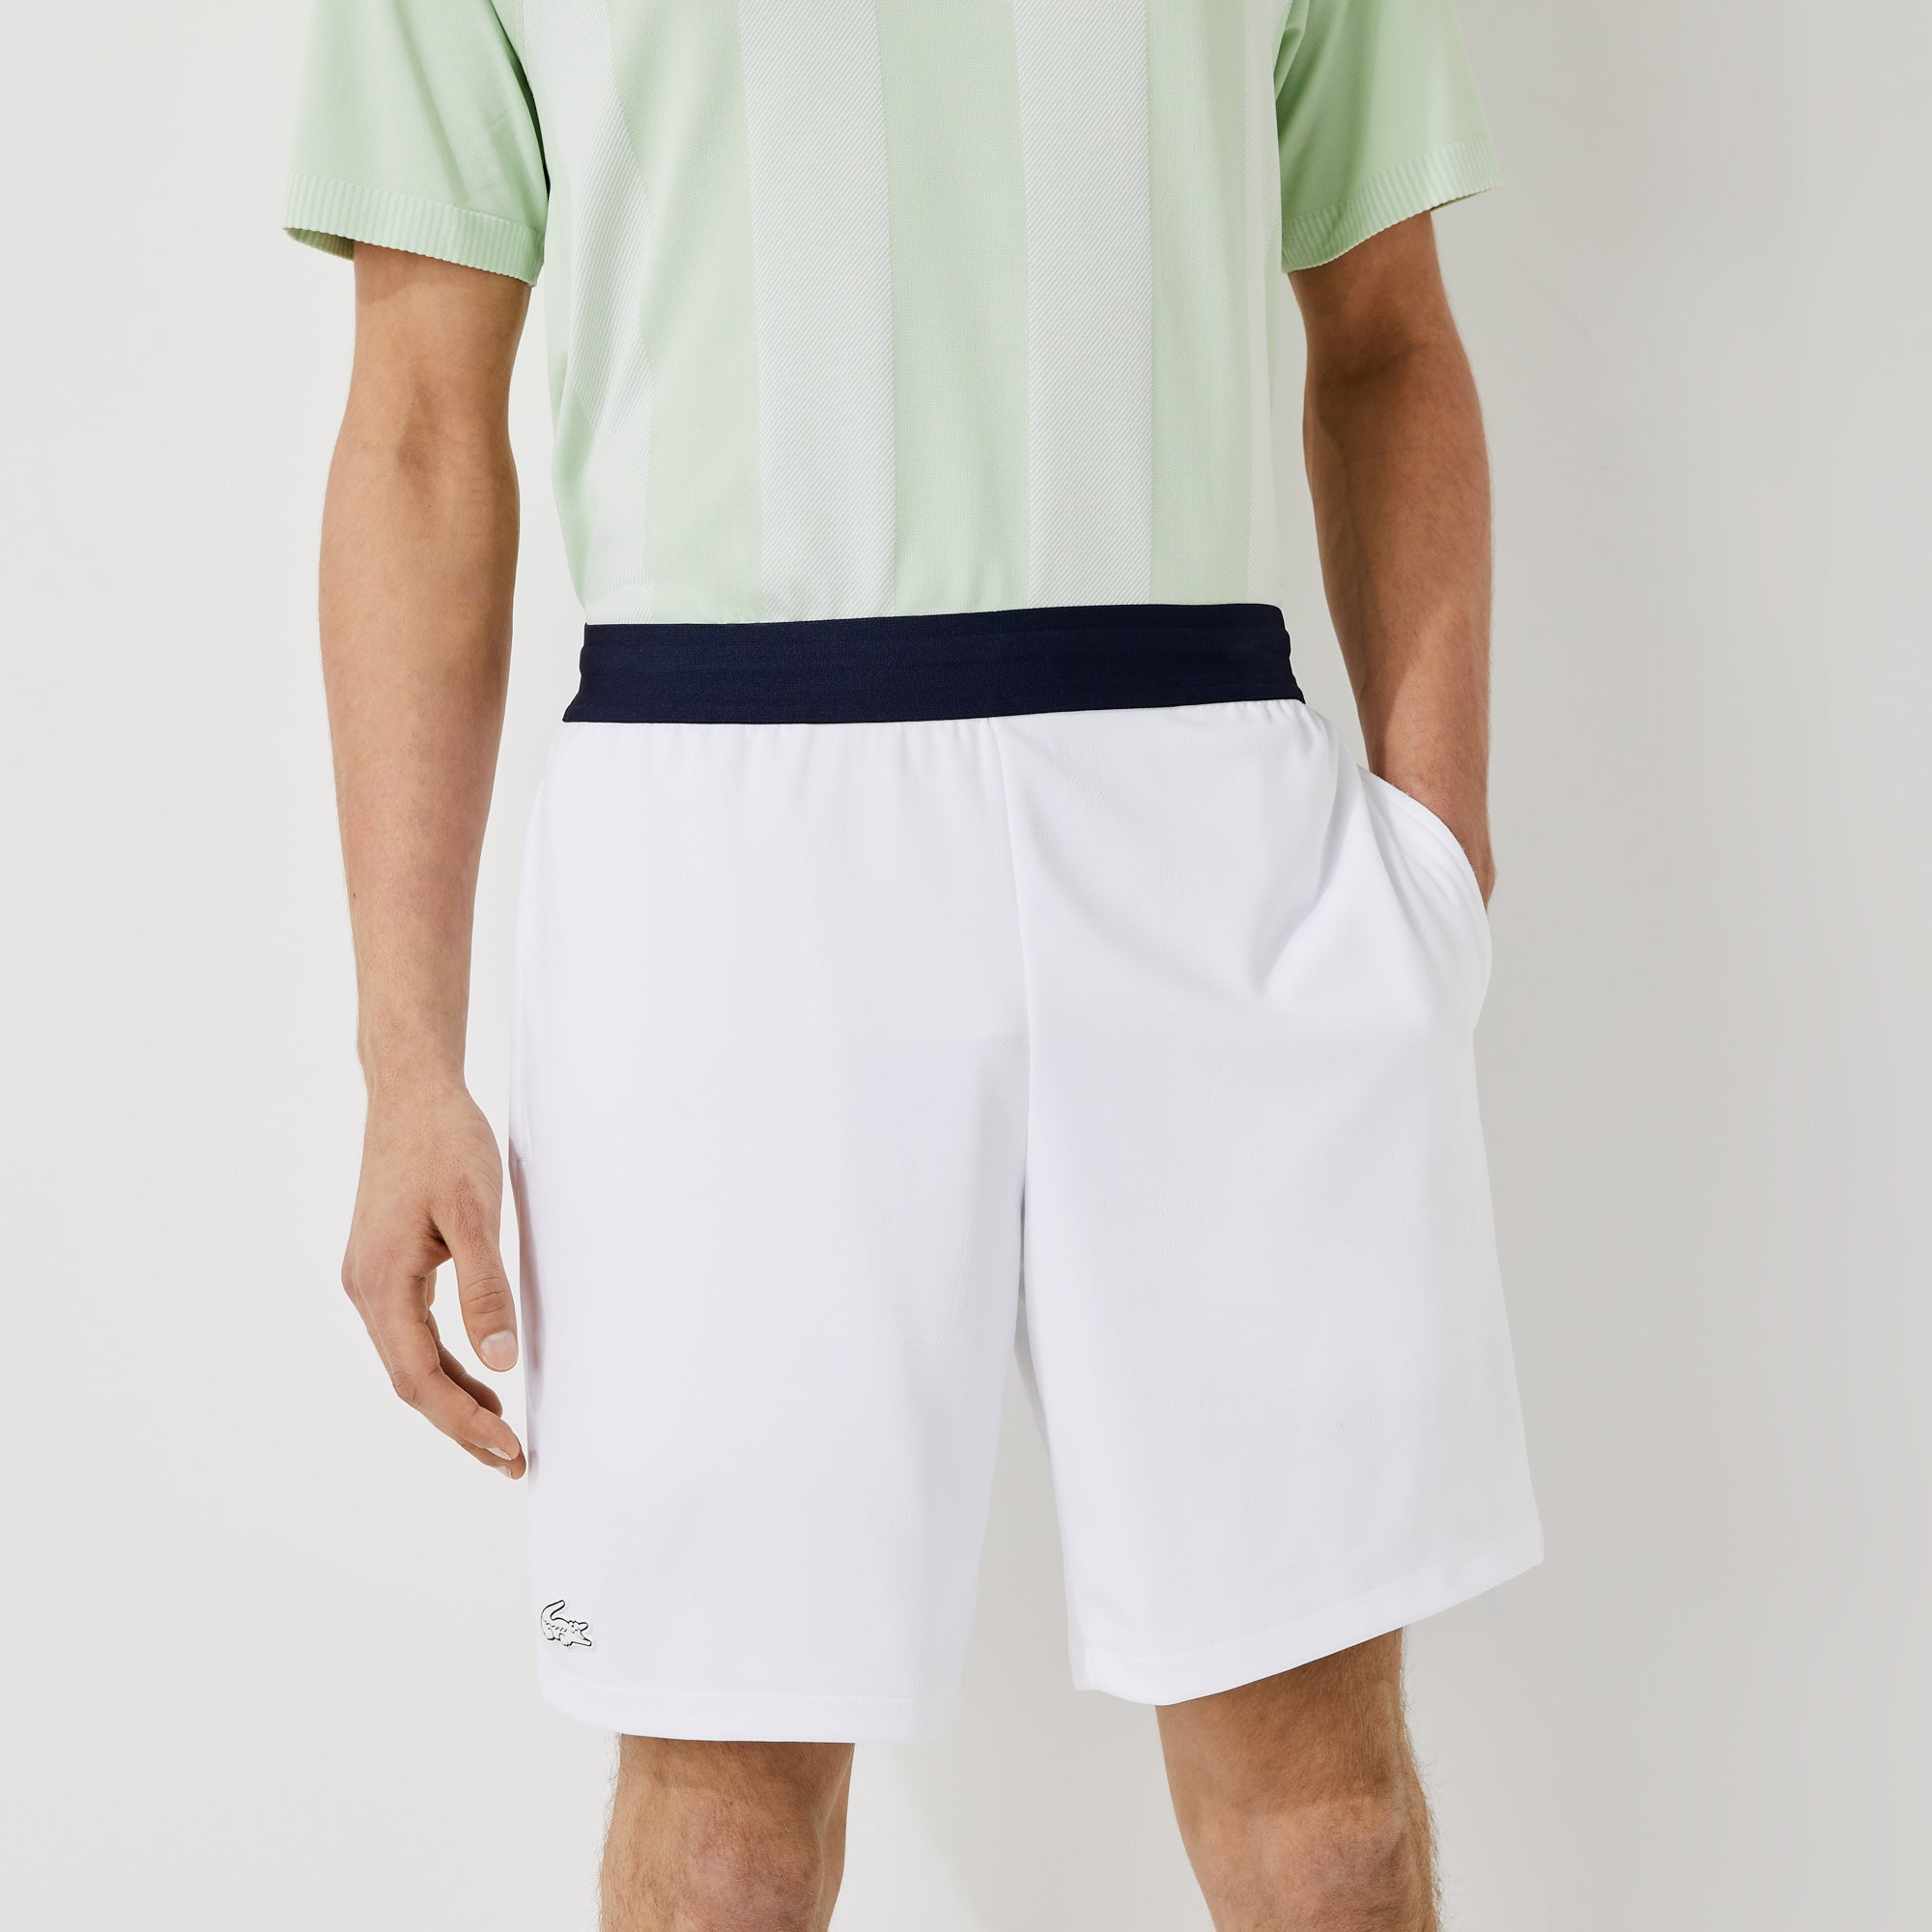 Lacoste Men's Jacquard Tennis Shorts White (4)